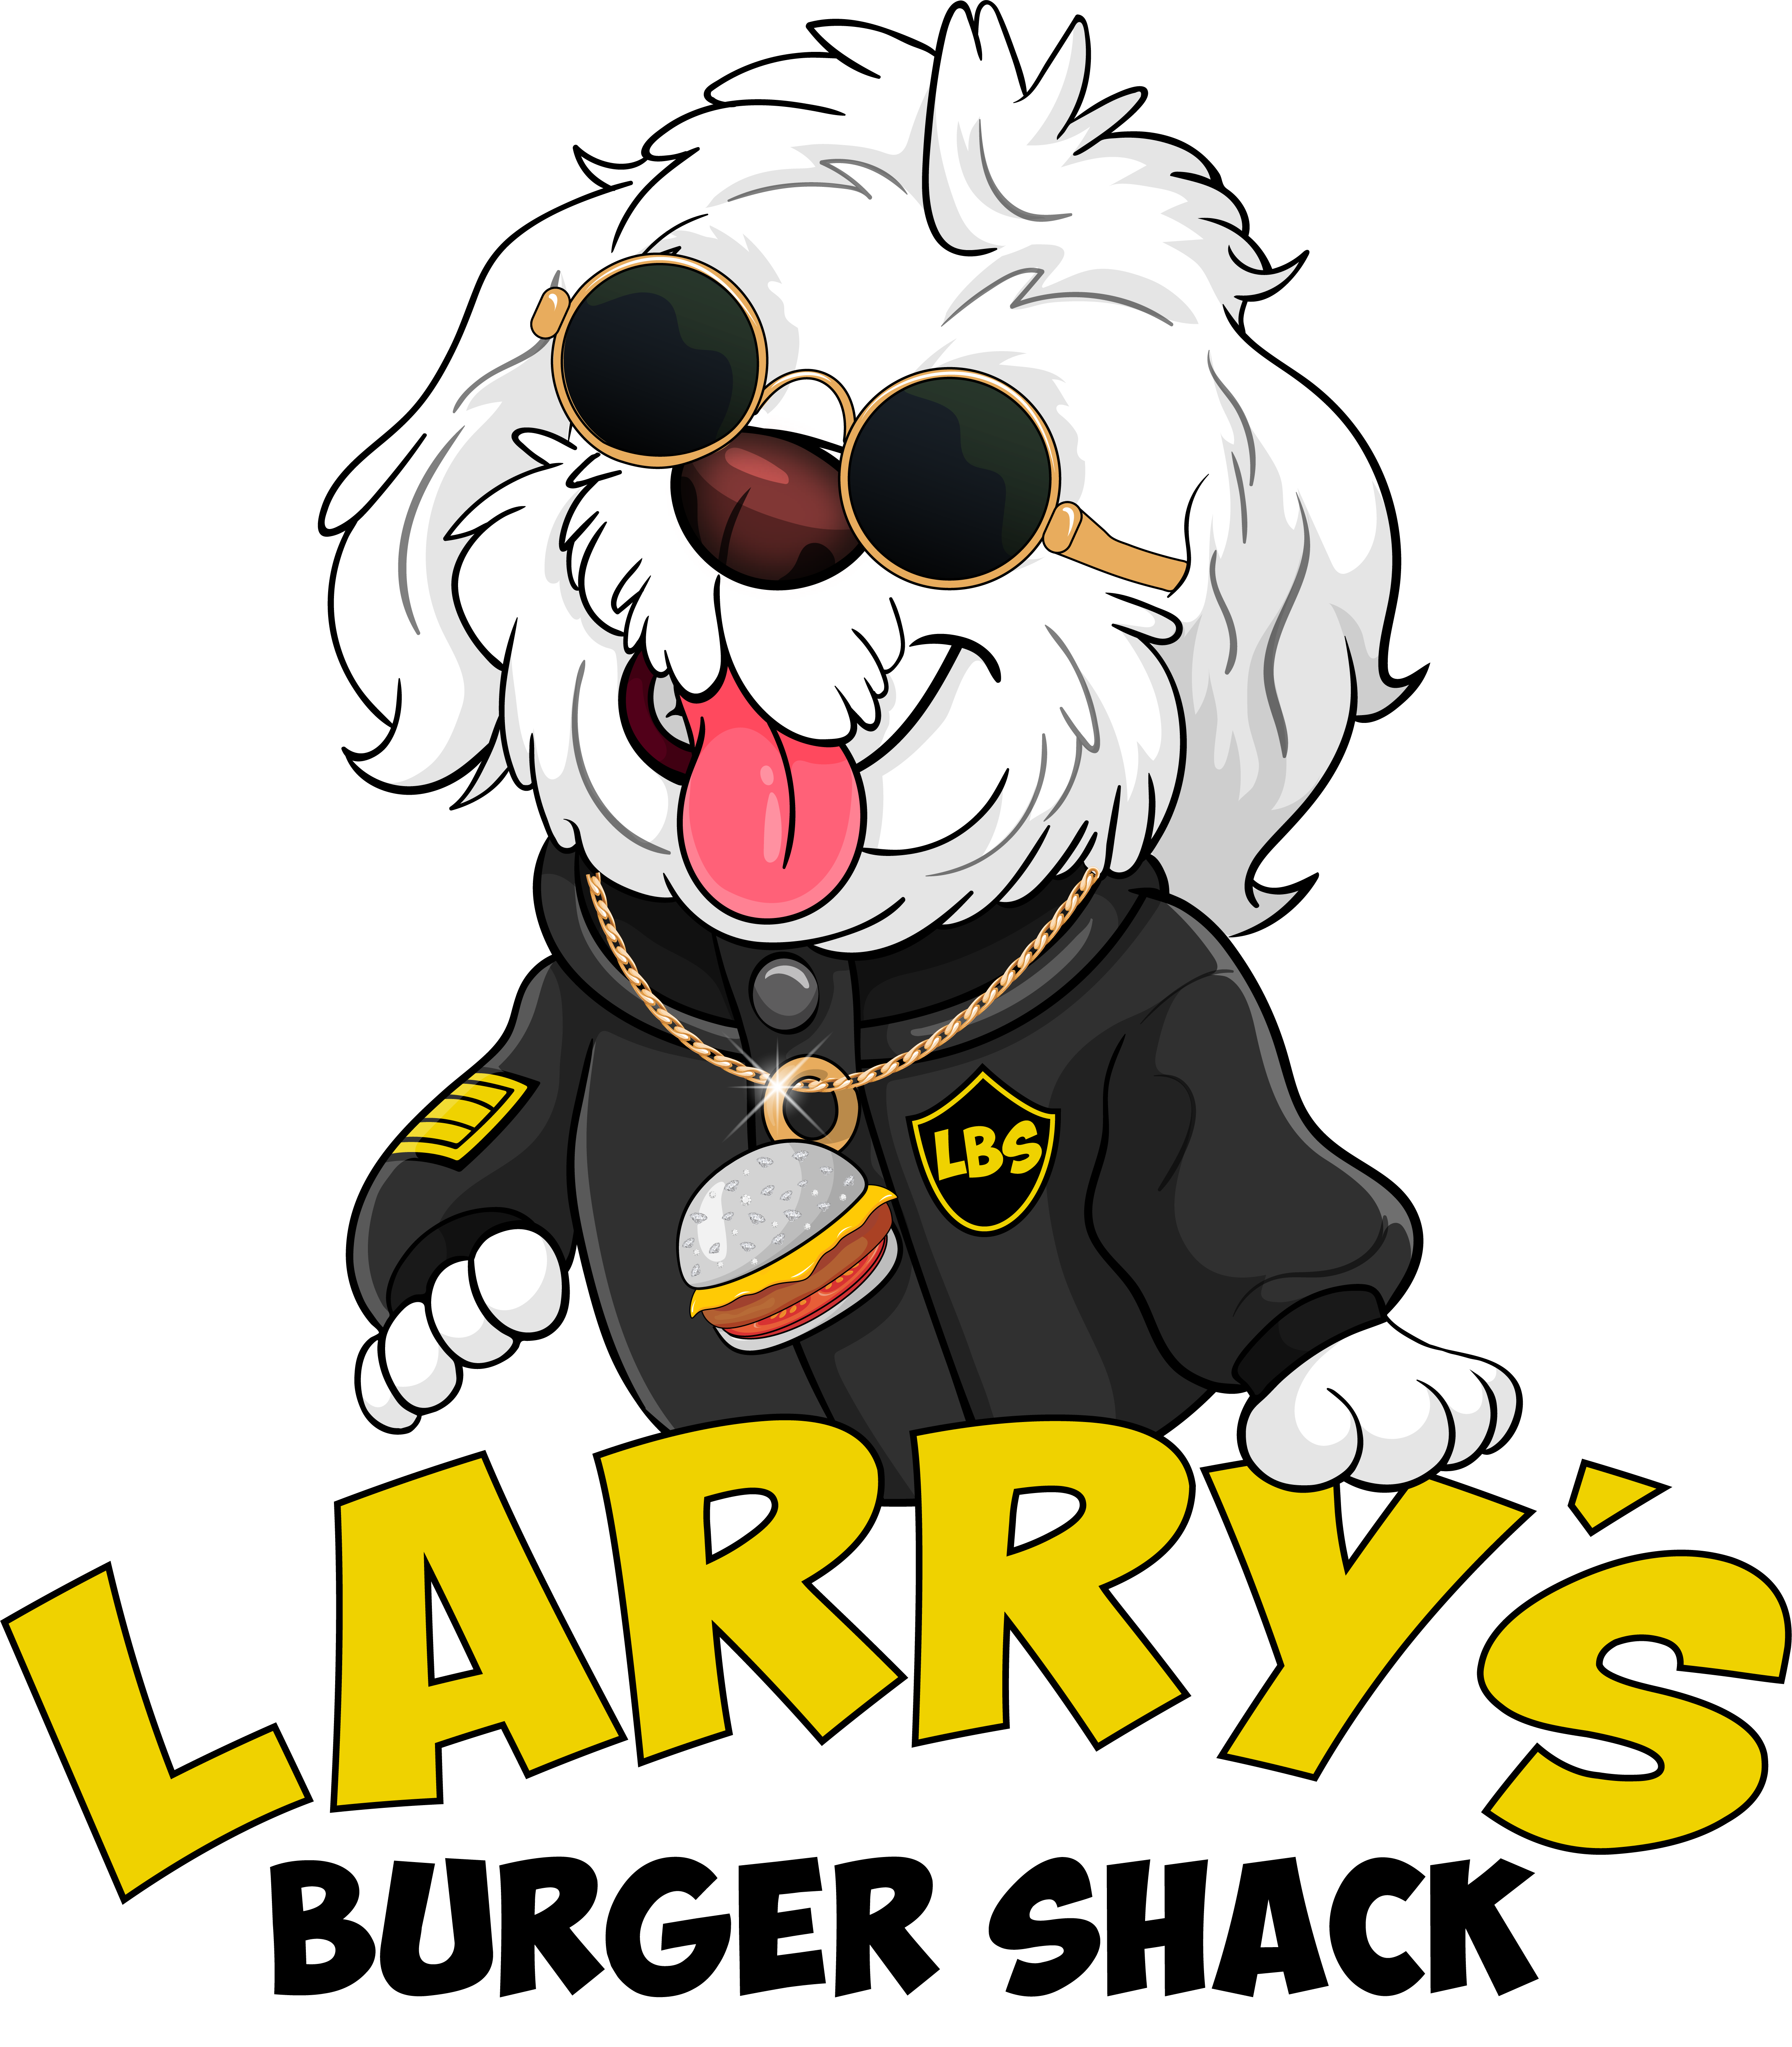 Larrys Burger Shack